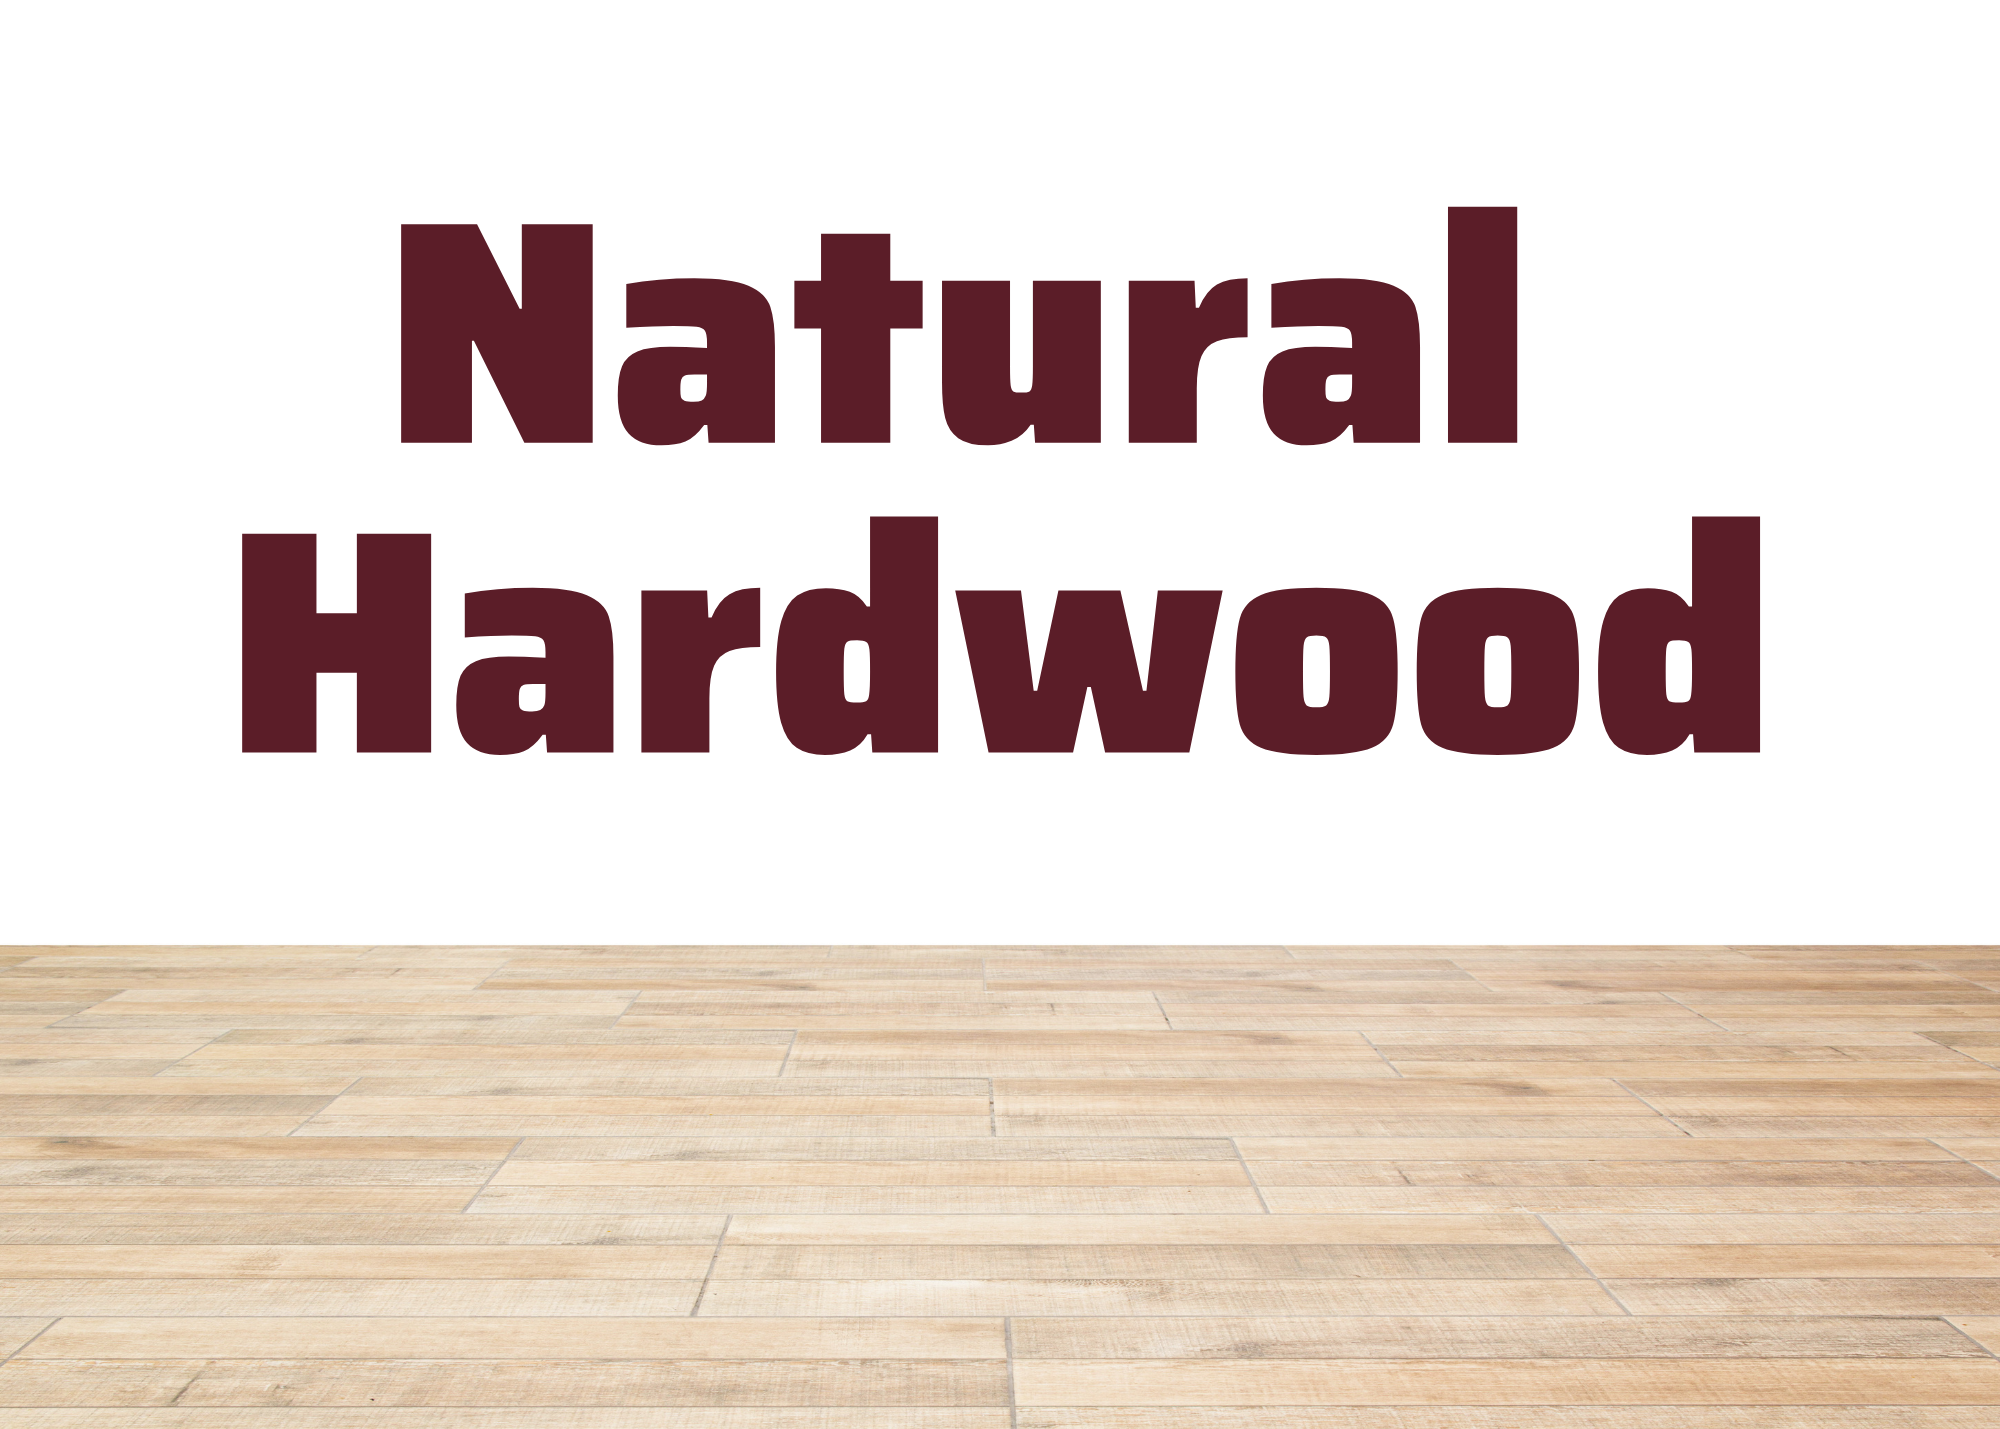 "Natural Hardwood" written over flooring from Fort Collins Grahams.